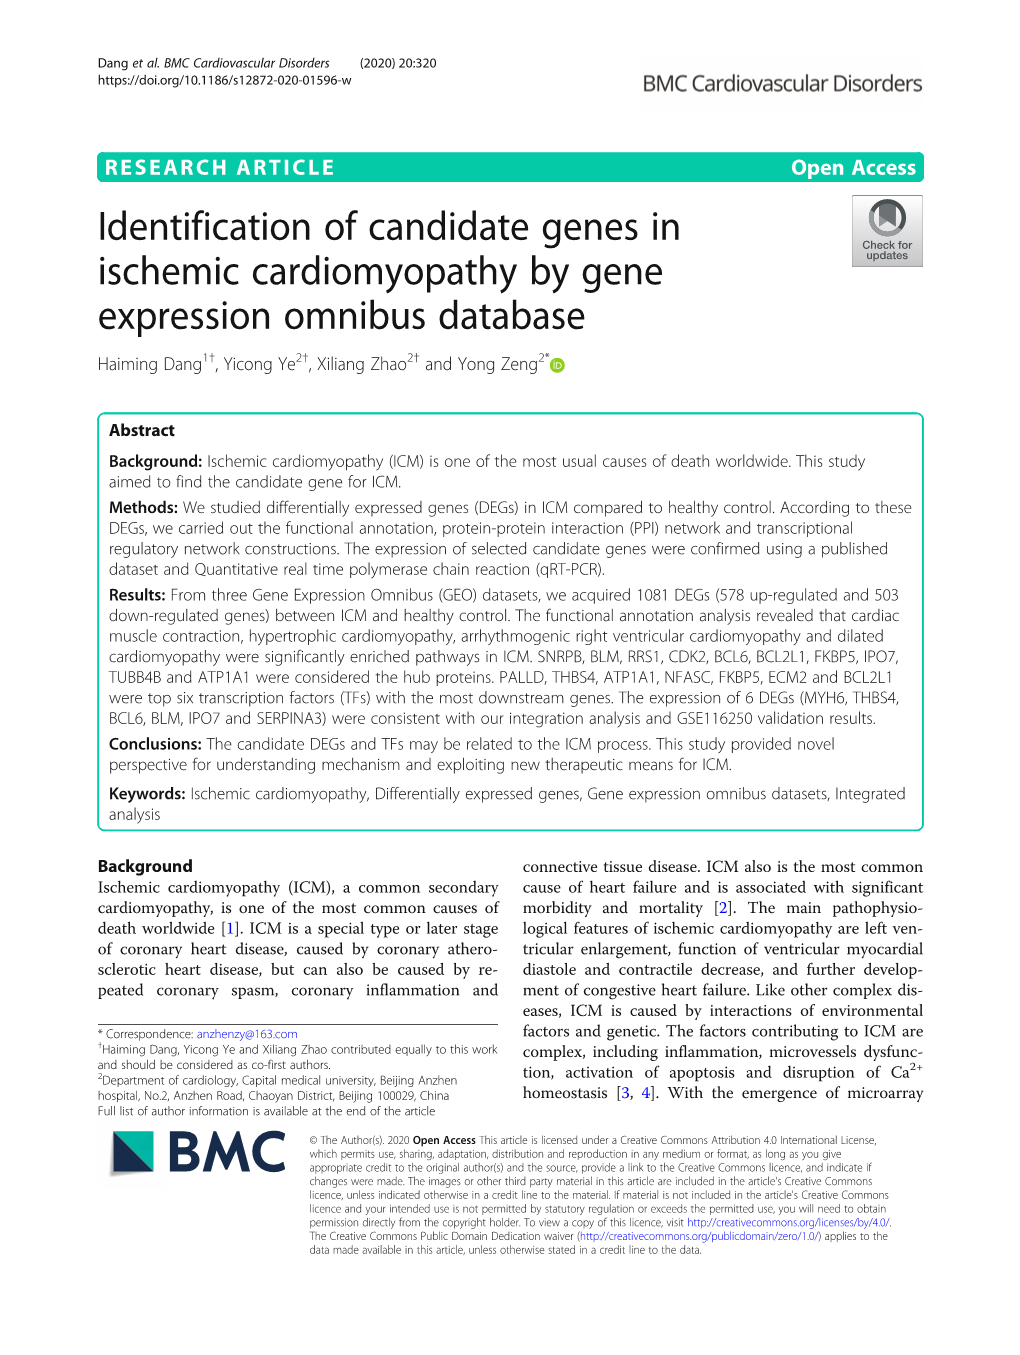 Identification of Candidate Genes in Ischemic Cardiomyopathy by Gene Expression Omnibus Database Haiming Dang1†, Yicong Ye2†, Xiliang Zhao2† and Yong Zeng2*